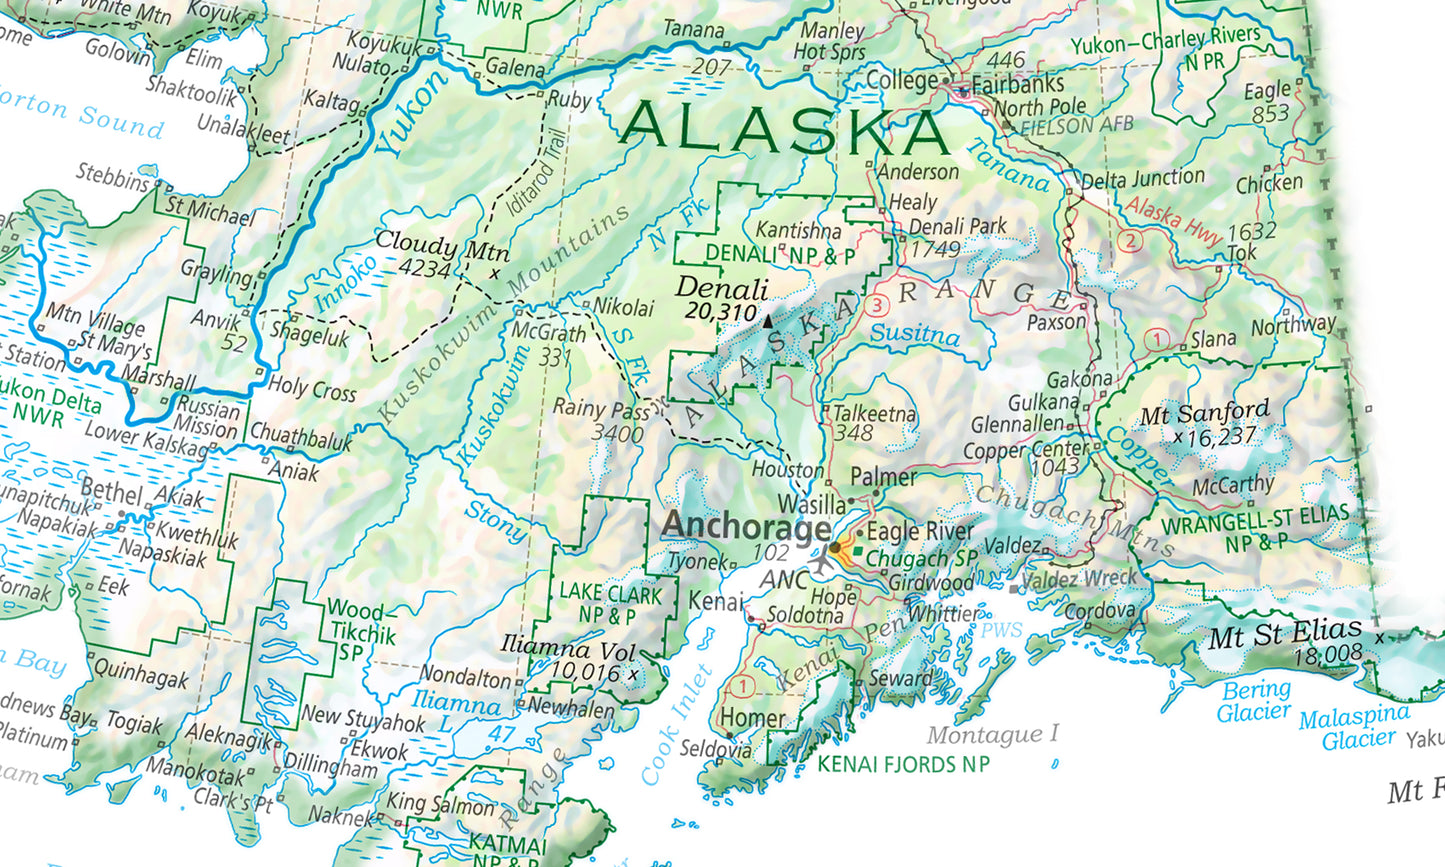 Portrait of Alaska